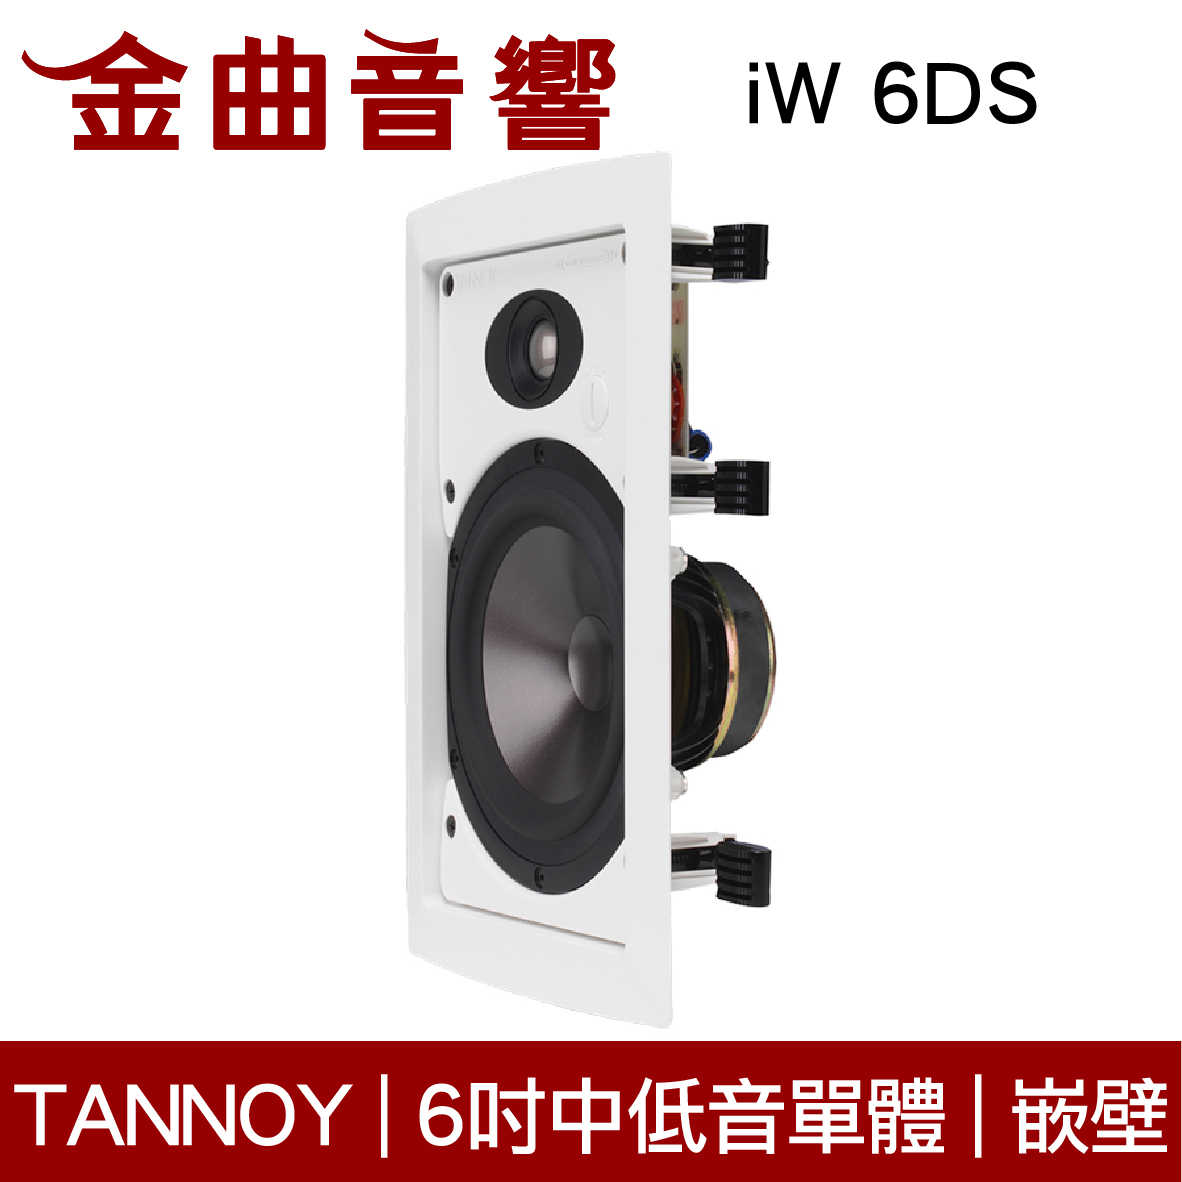 英國 TANNOY iW 6DS 嵌壁 嵌入式 喇叭 吸頂音響 IW6 DS | 金曲音響